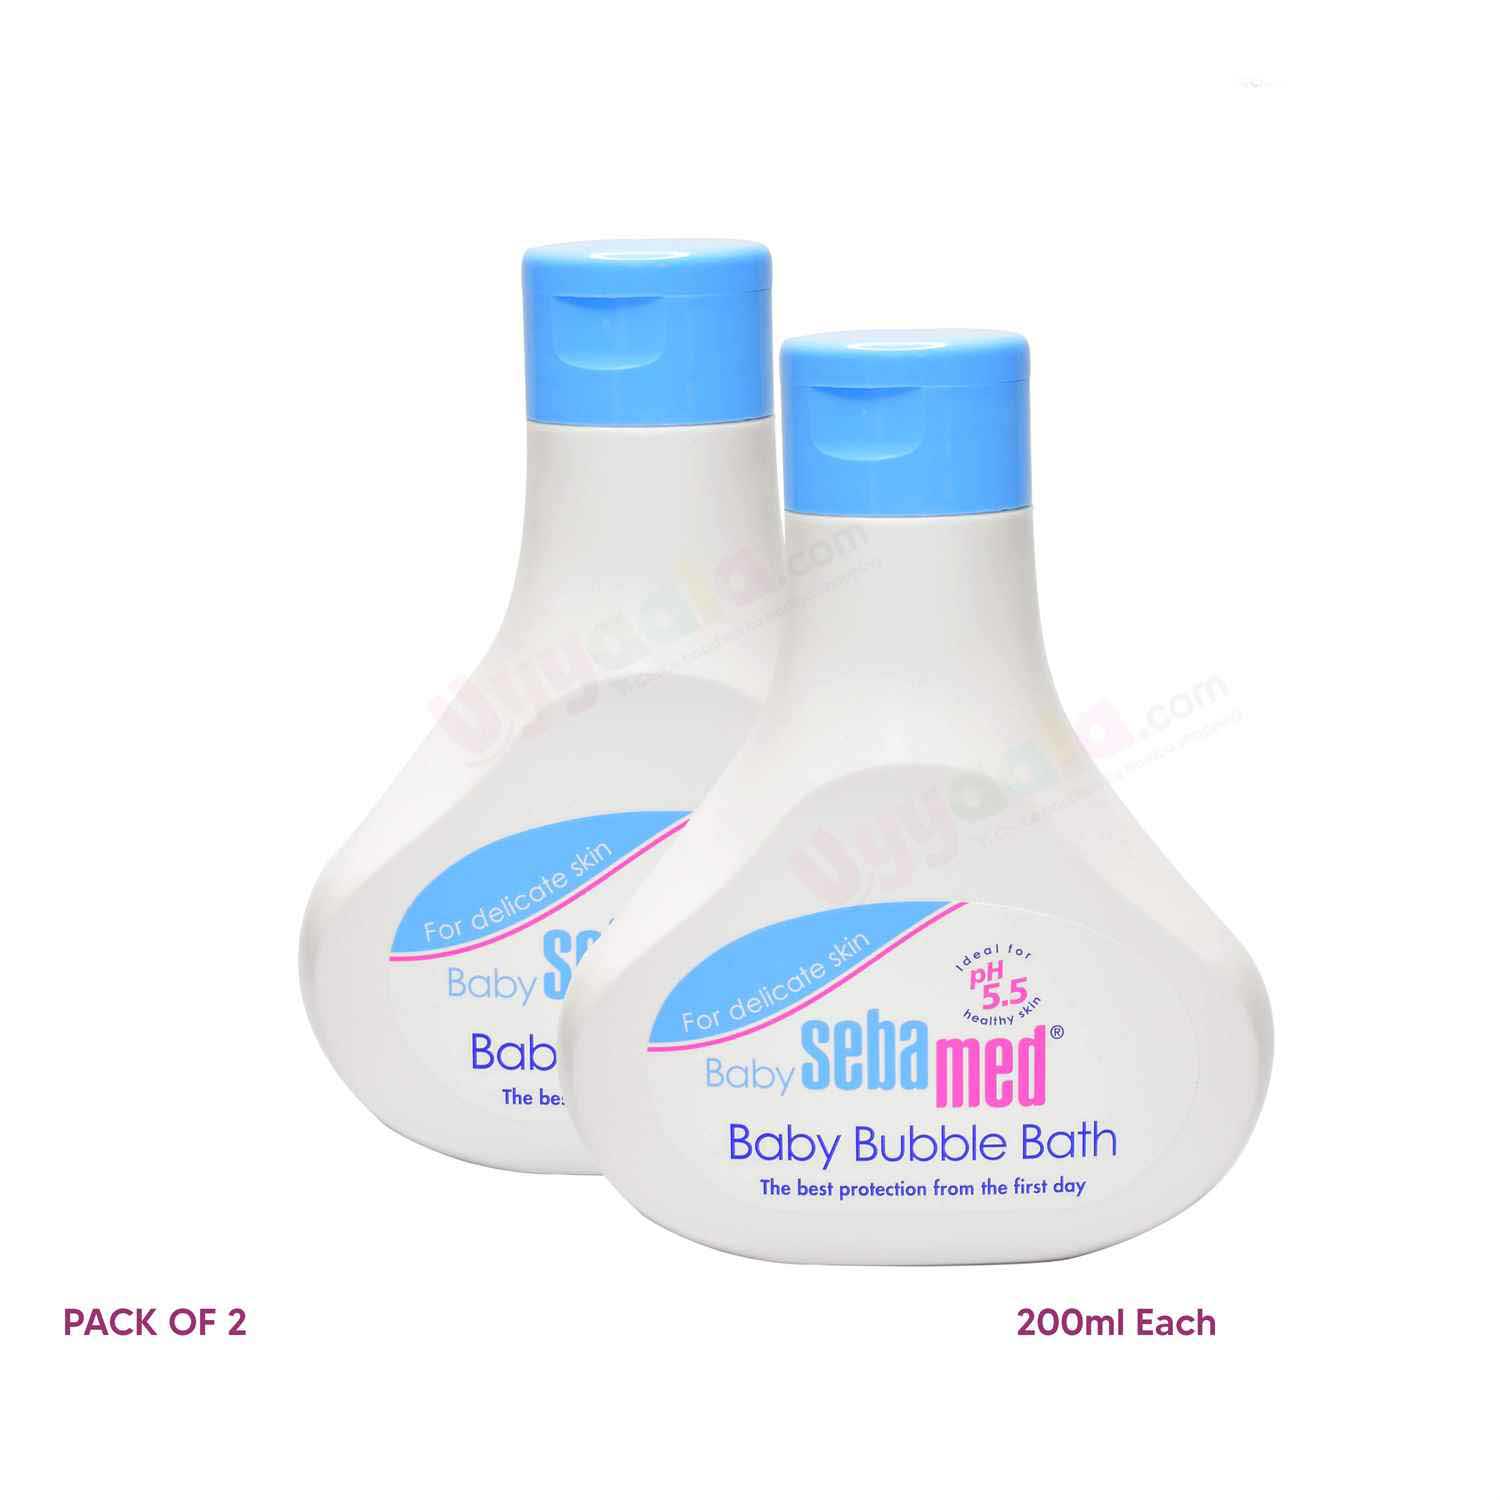 SEBAMED Baby Bubble Bath Extra Mild Pack of 2 (200ml Each)